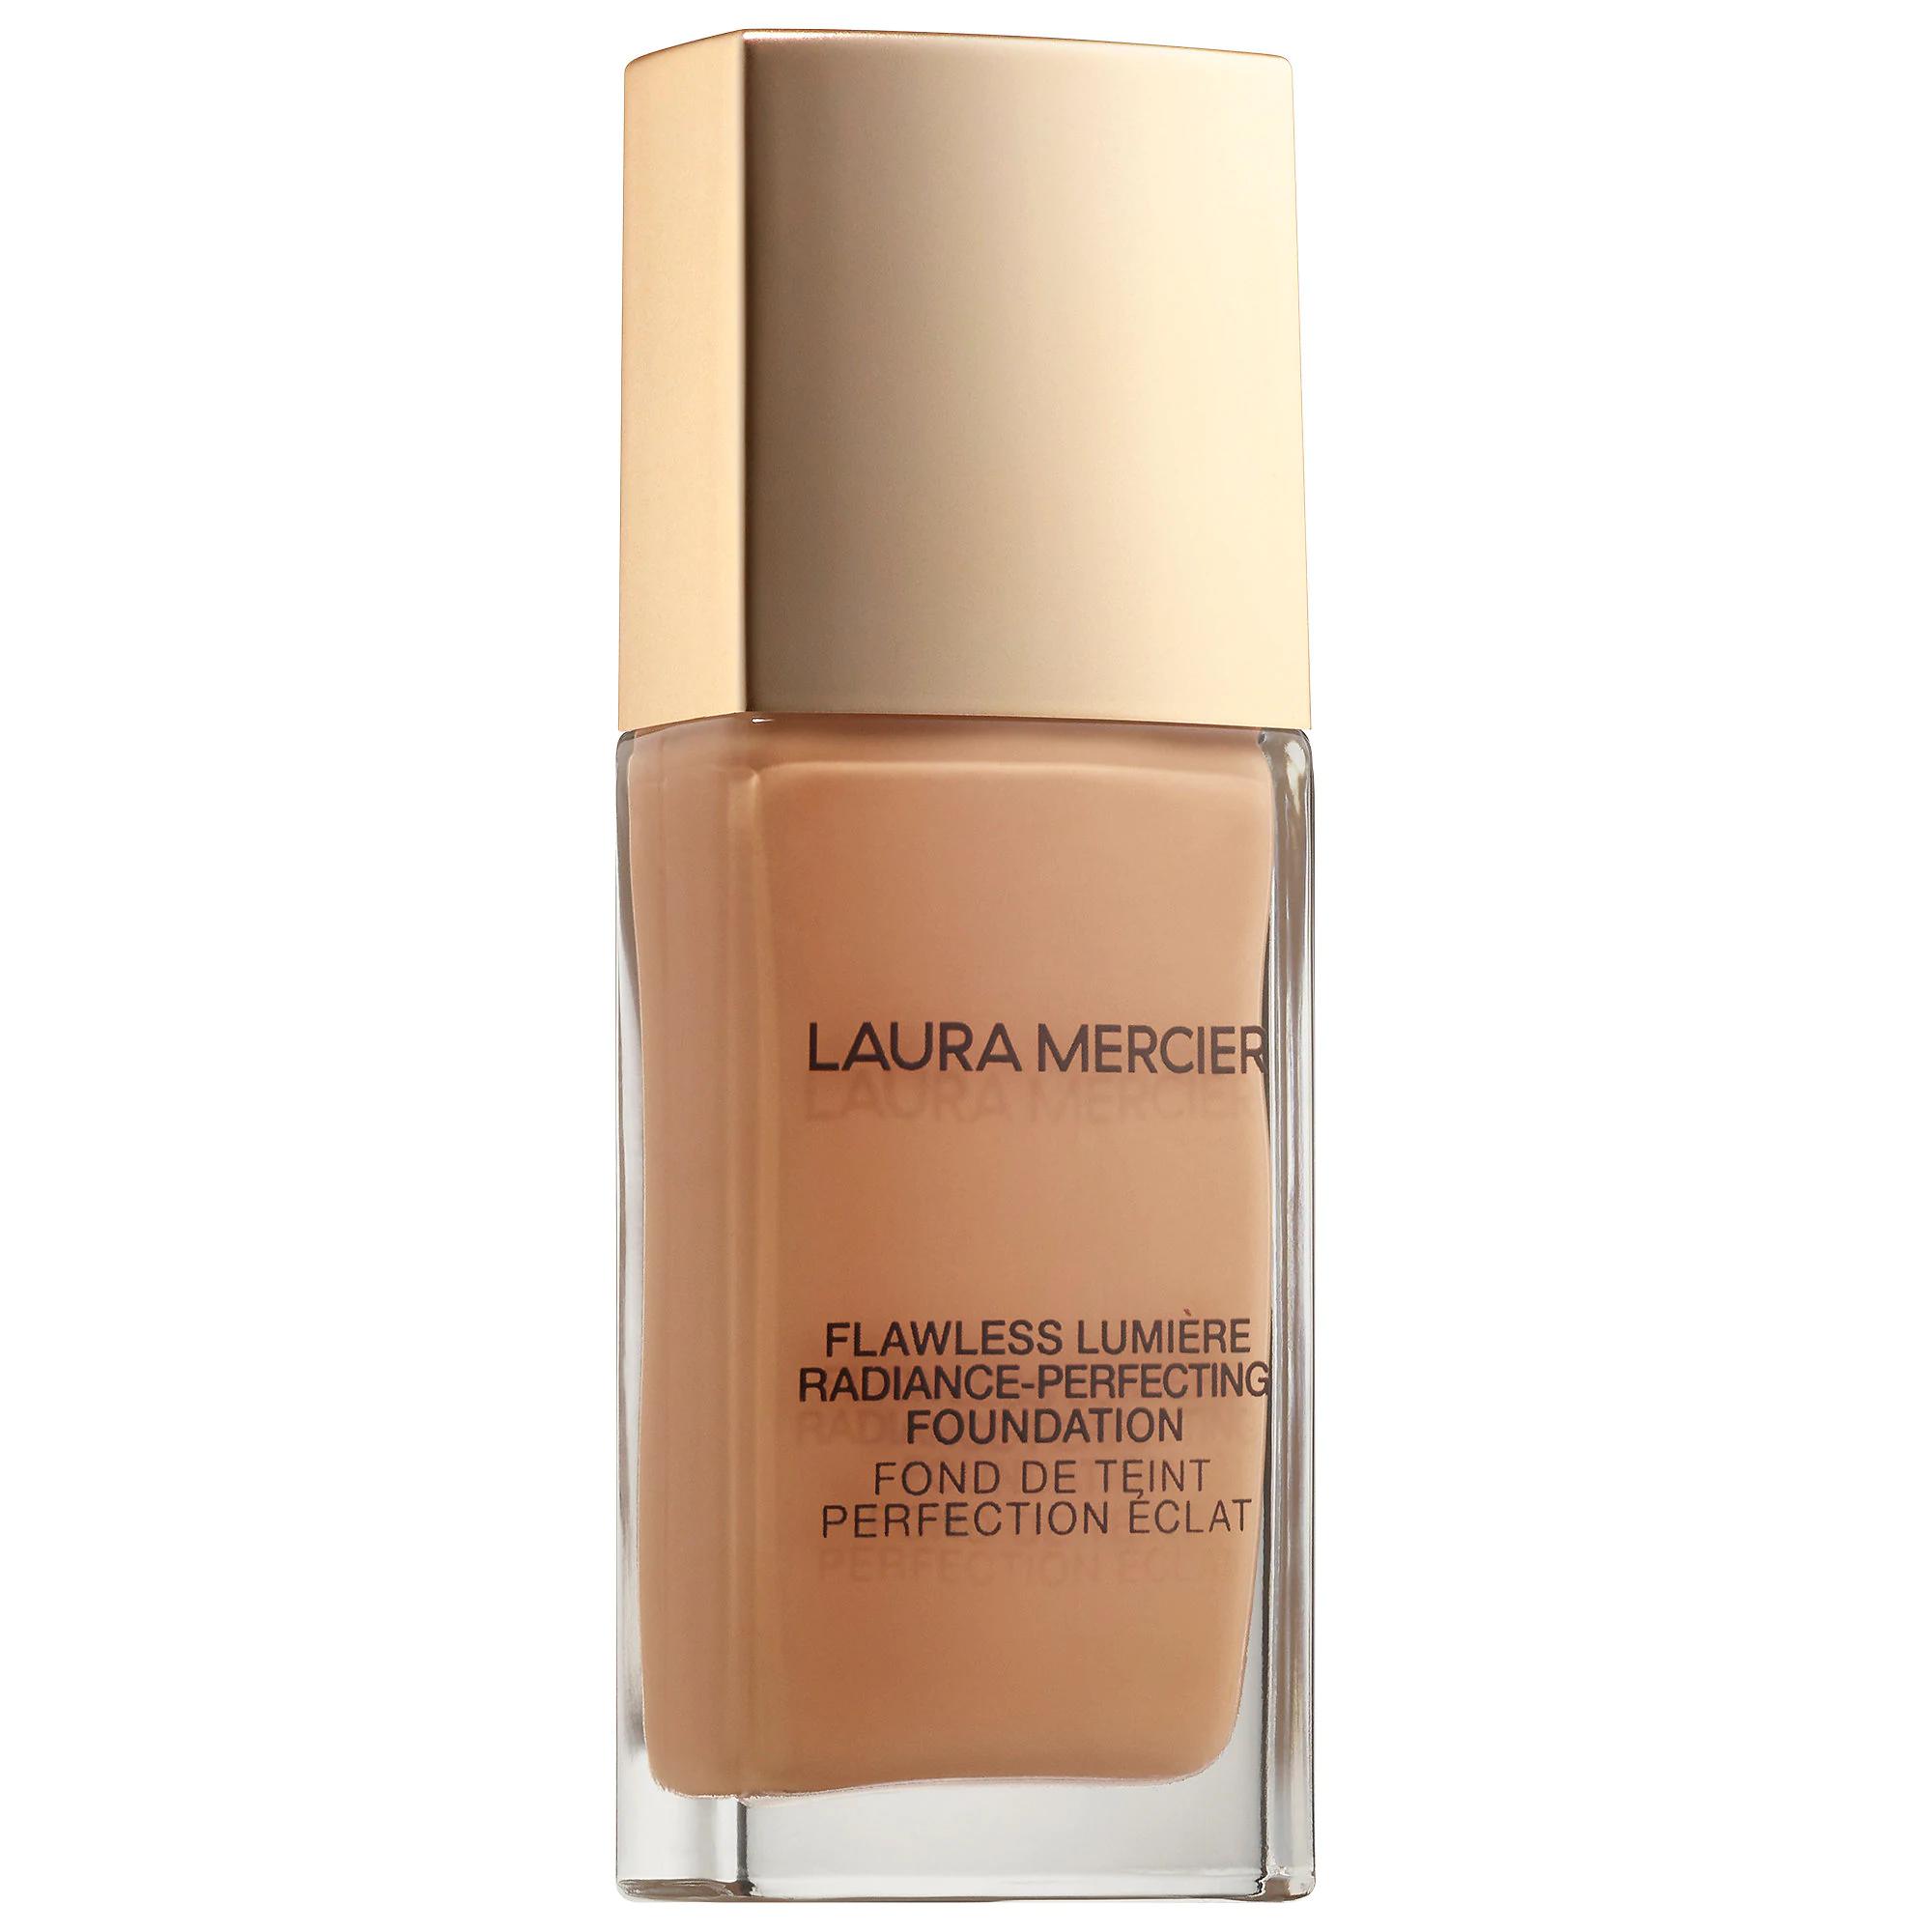 Laura Mercier Flawless Lumiere Radiance-Perfecting Foundation Dune 3C1